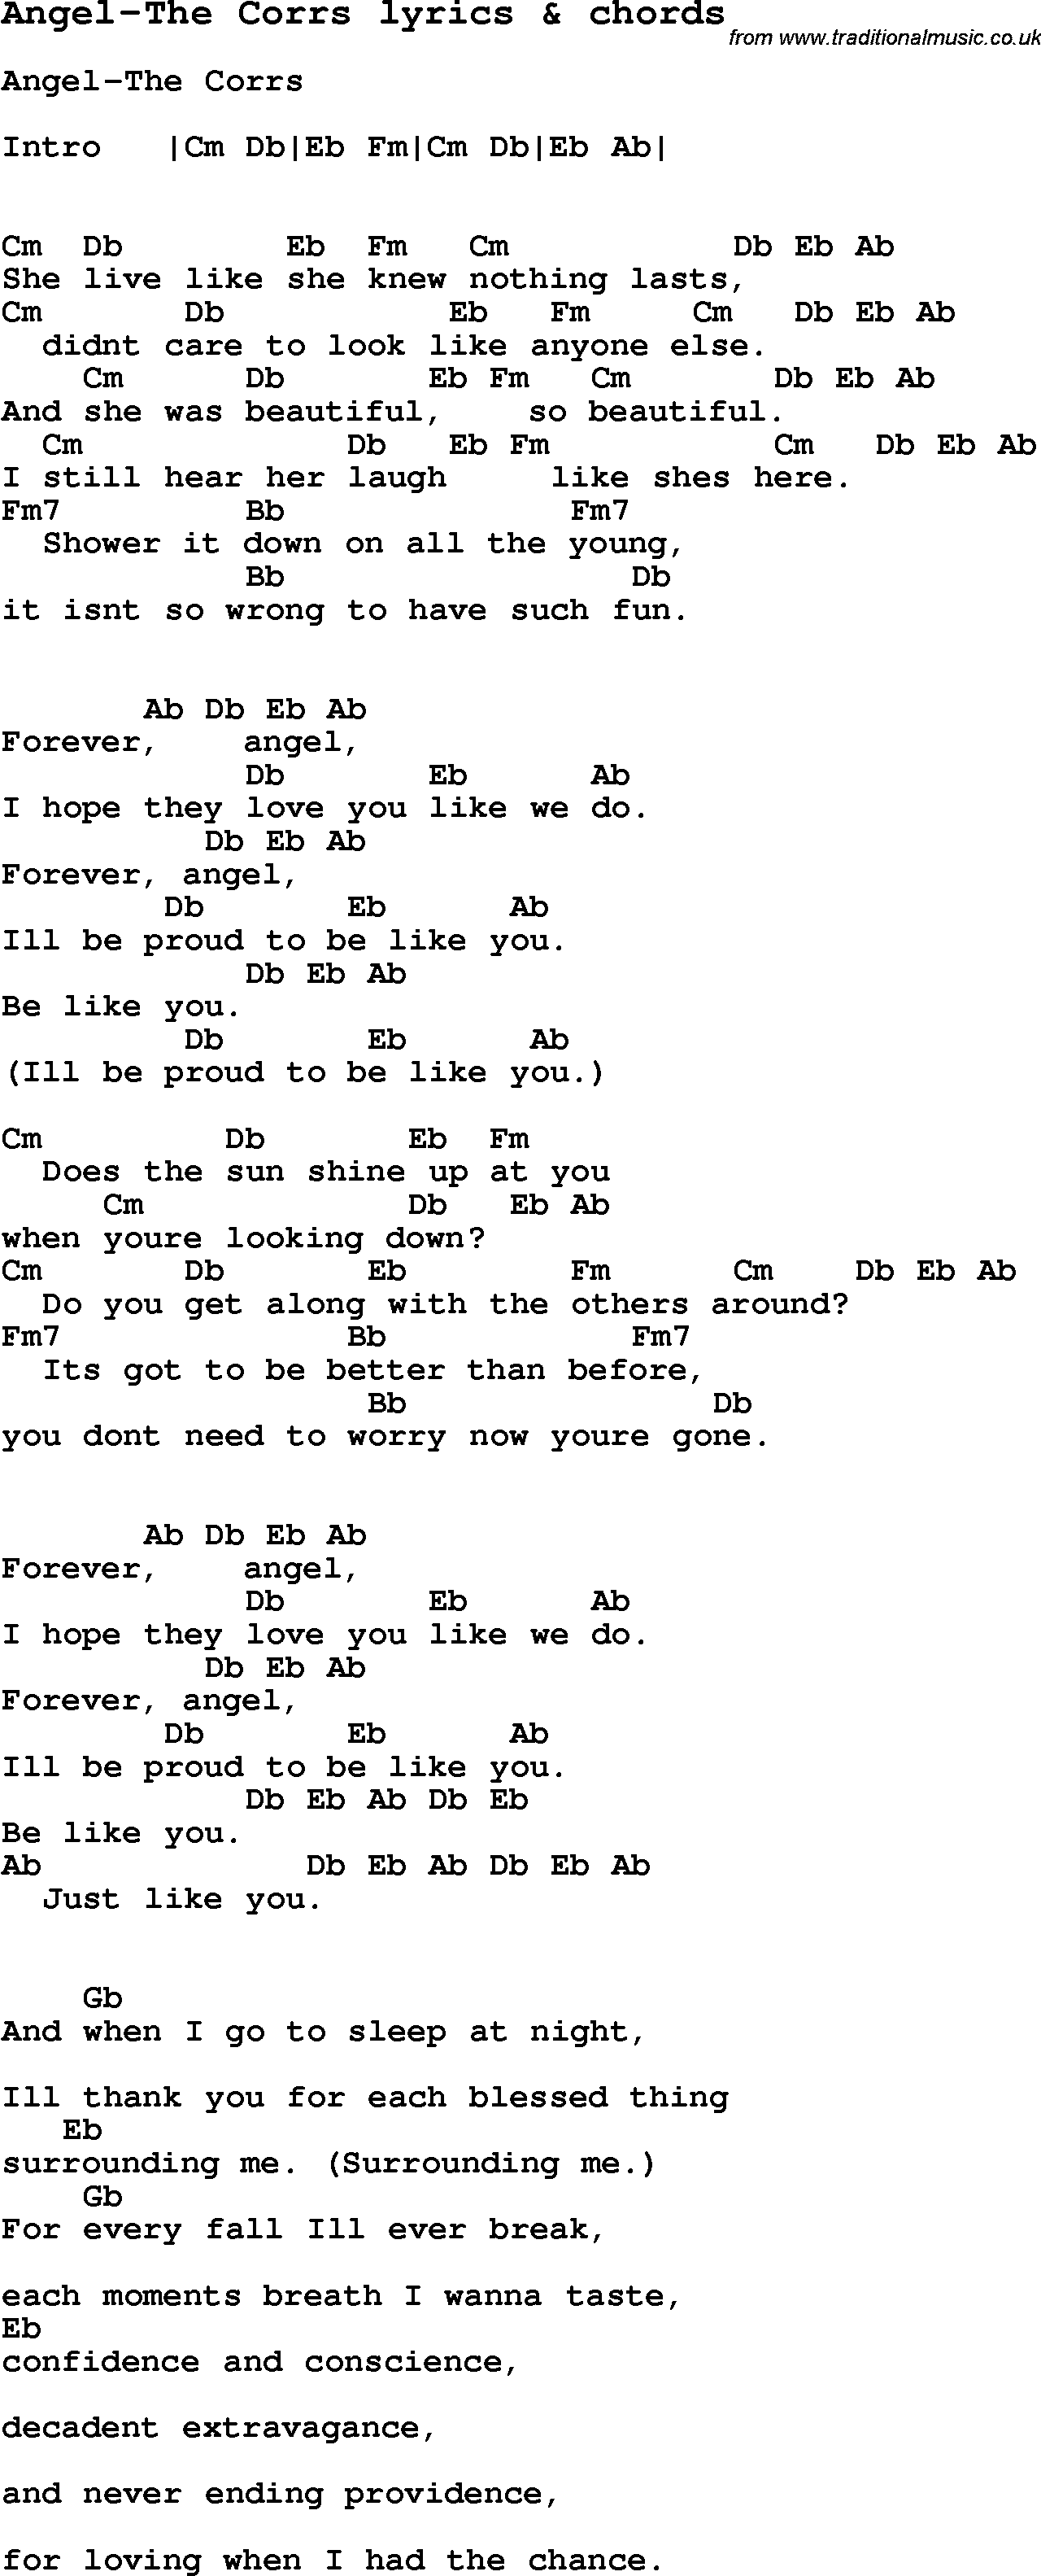 Love Song Lyrics for: Angel-The Corrs with chords for Ukulele, Guitar Banjo etc.